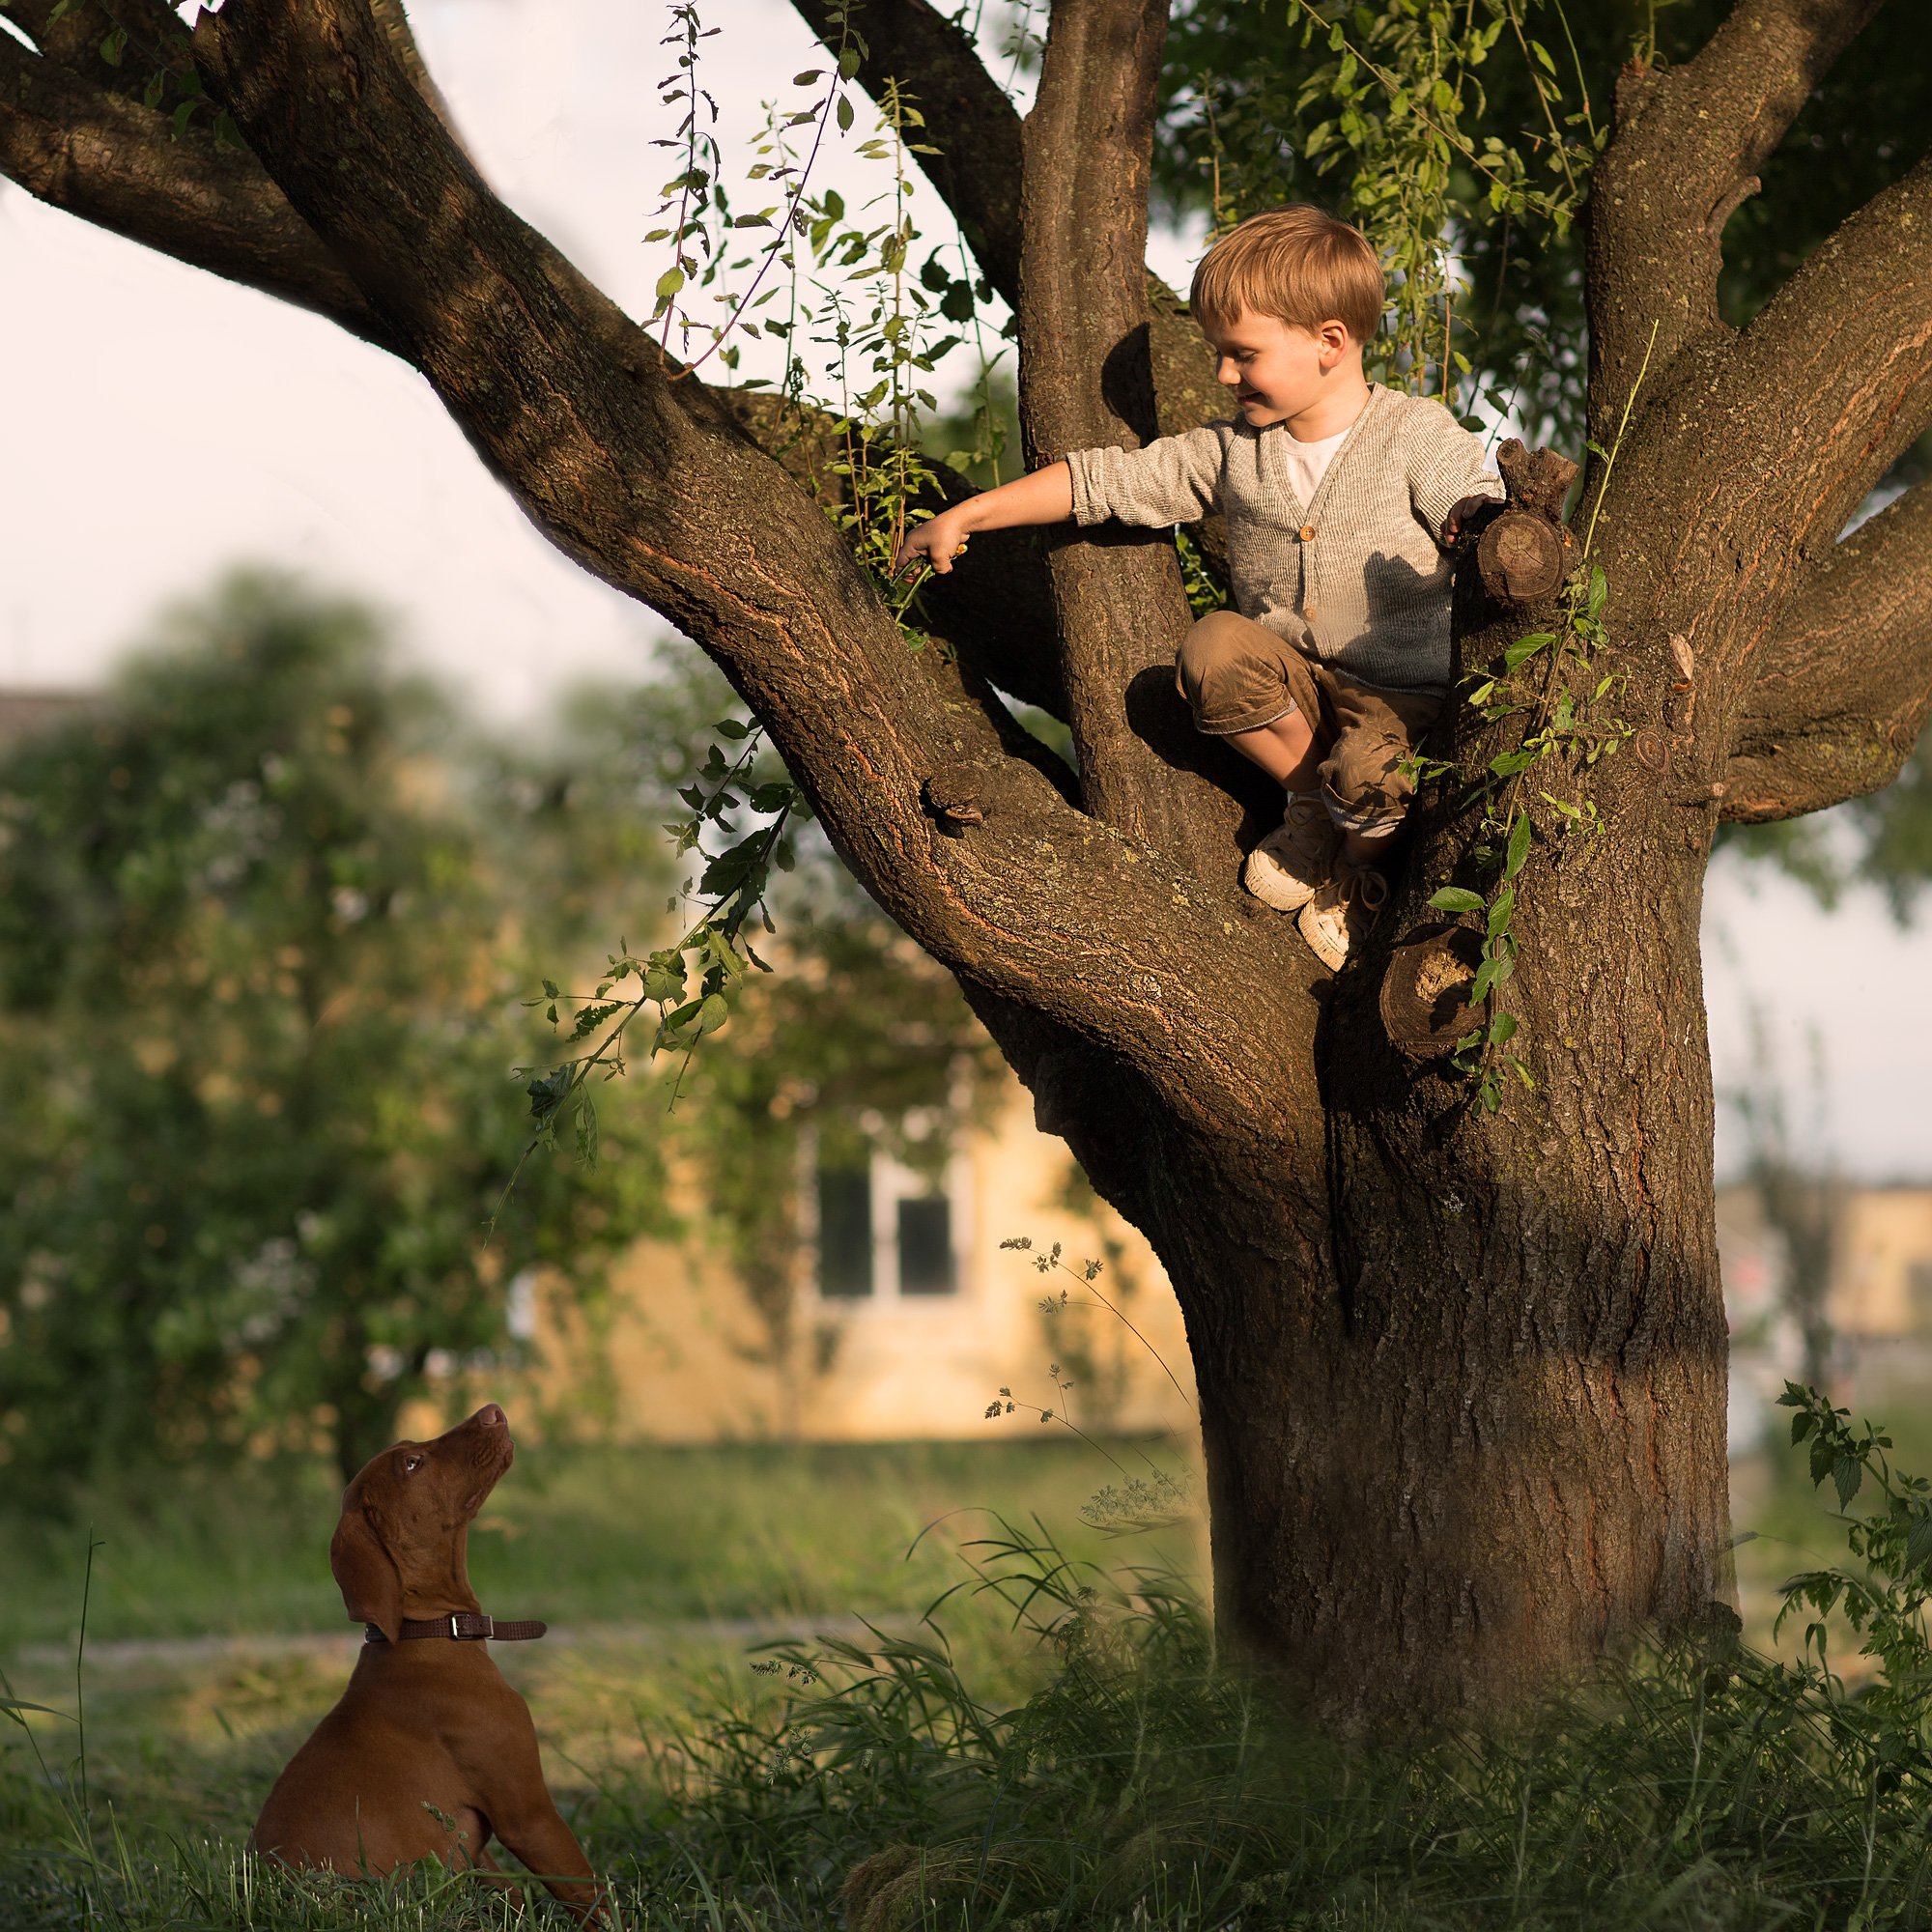 дети собака друг дружба игра дрессировка лето дерево трава кенон  85мм, Евгения Брусенцова